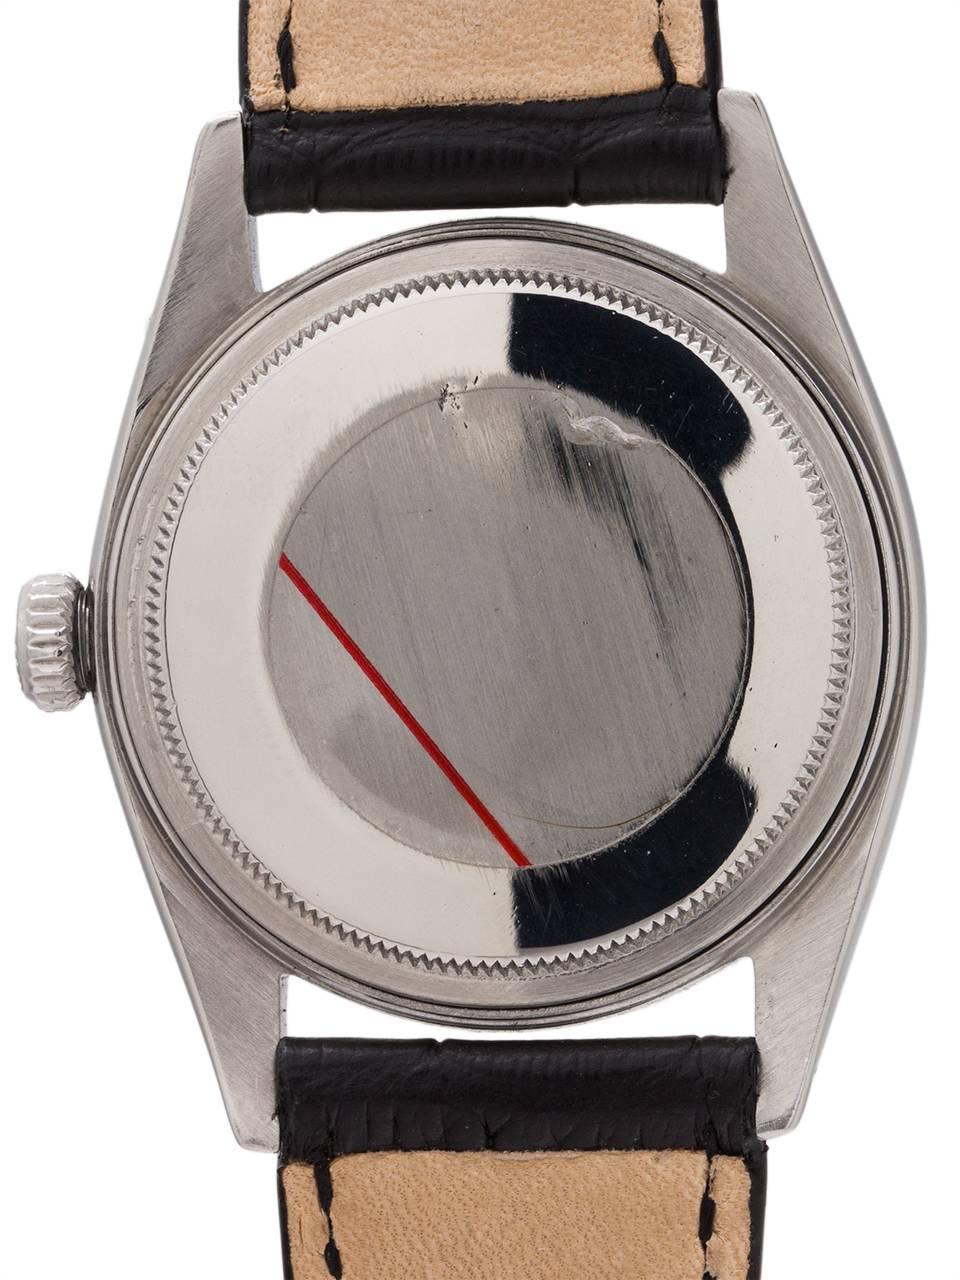 Men's Rolex White Gold Stainless Steel Datejust self winding wristwatch, circa 1961